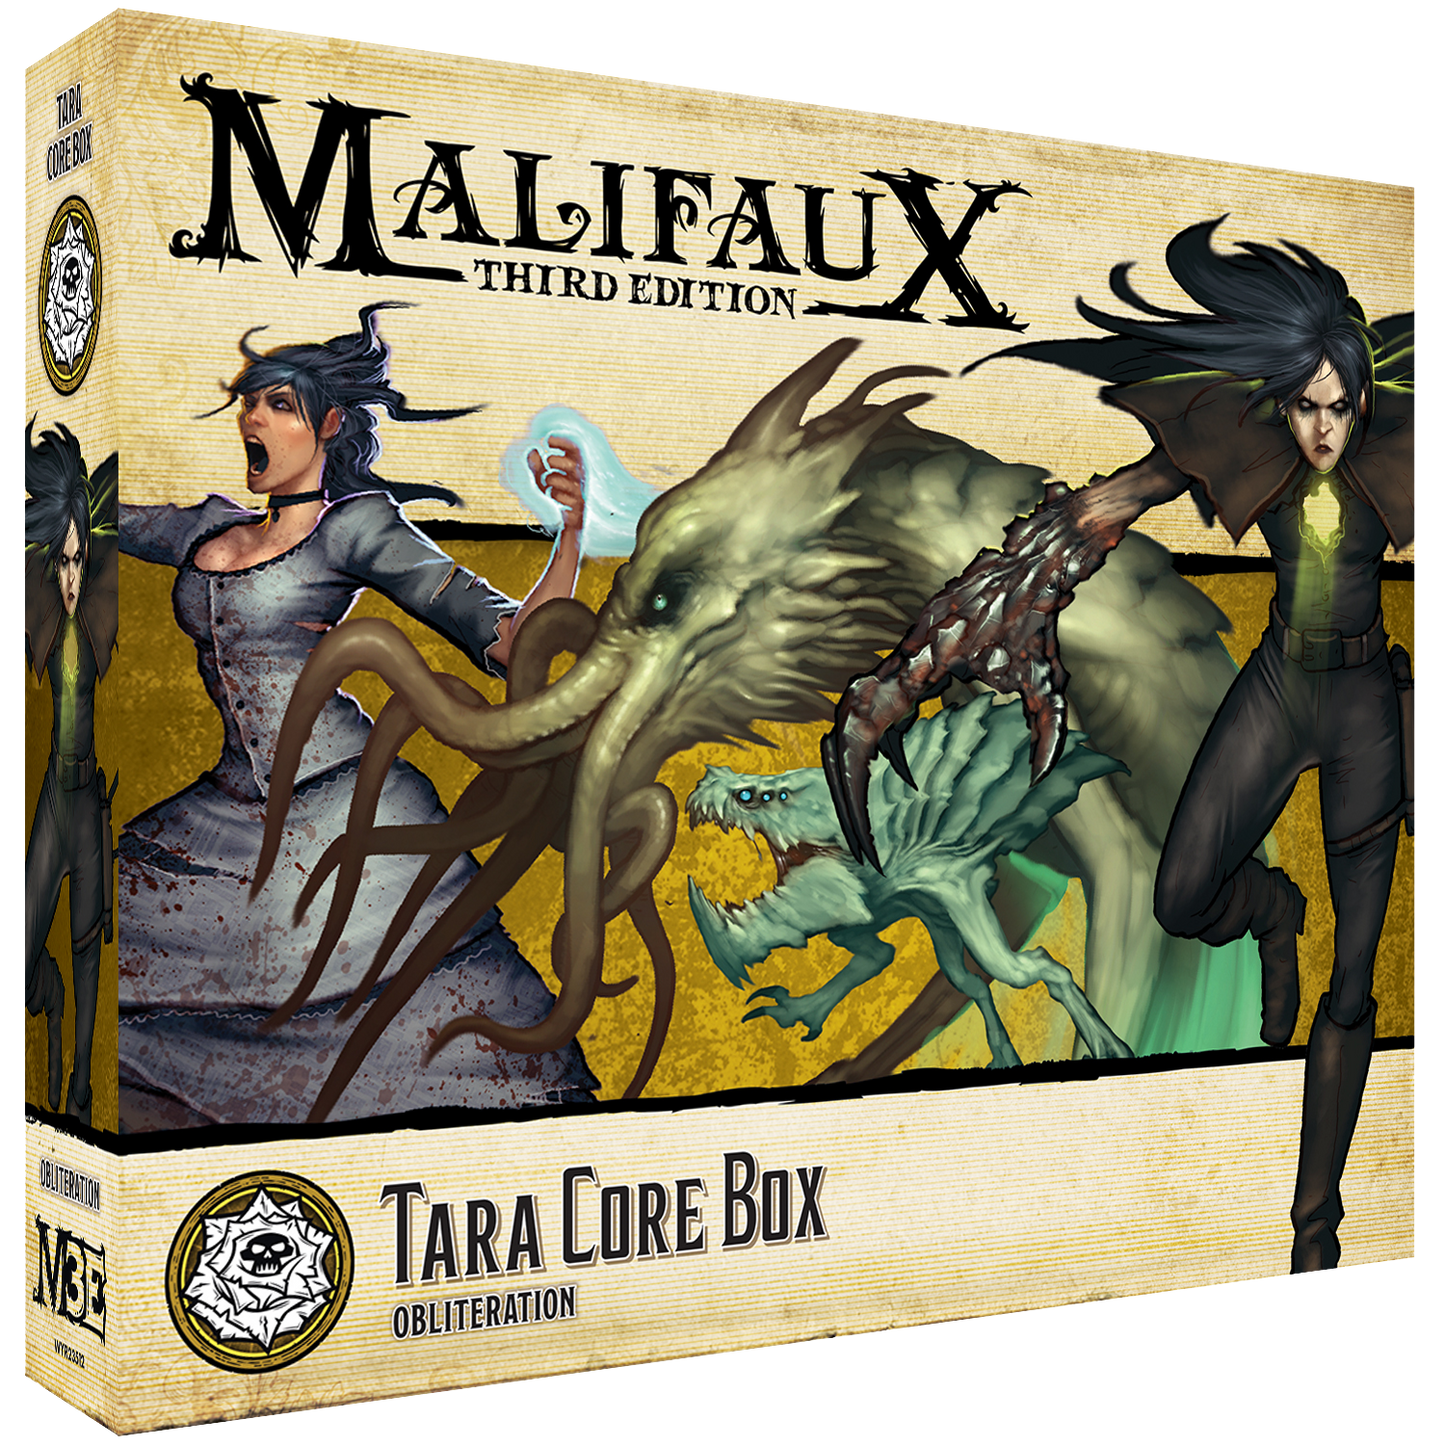 Tara Core Box - Wyrd Miniatures - Online Store